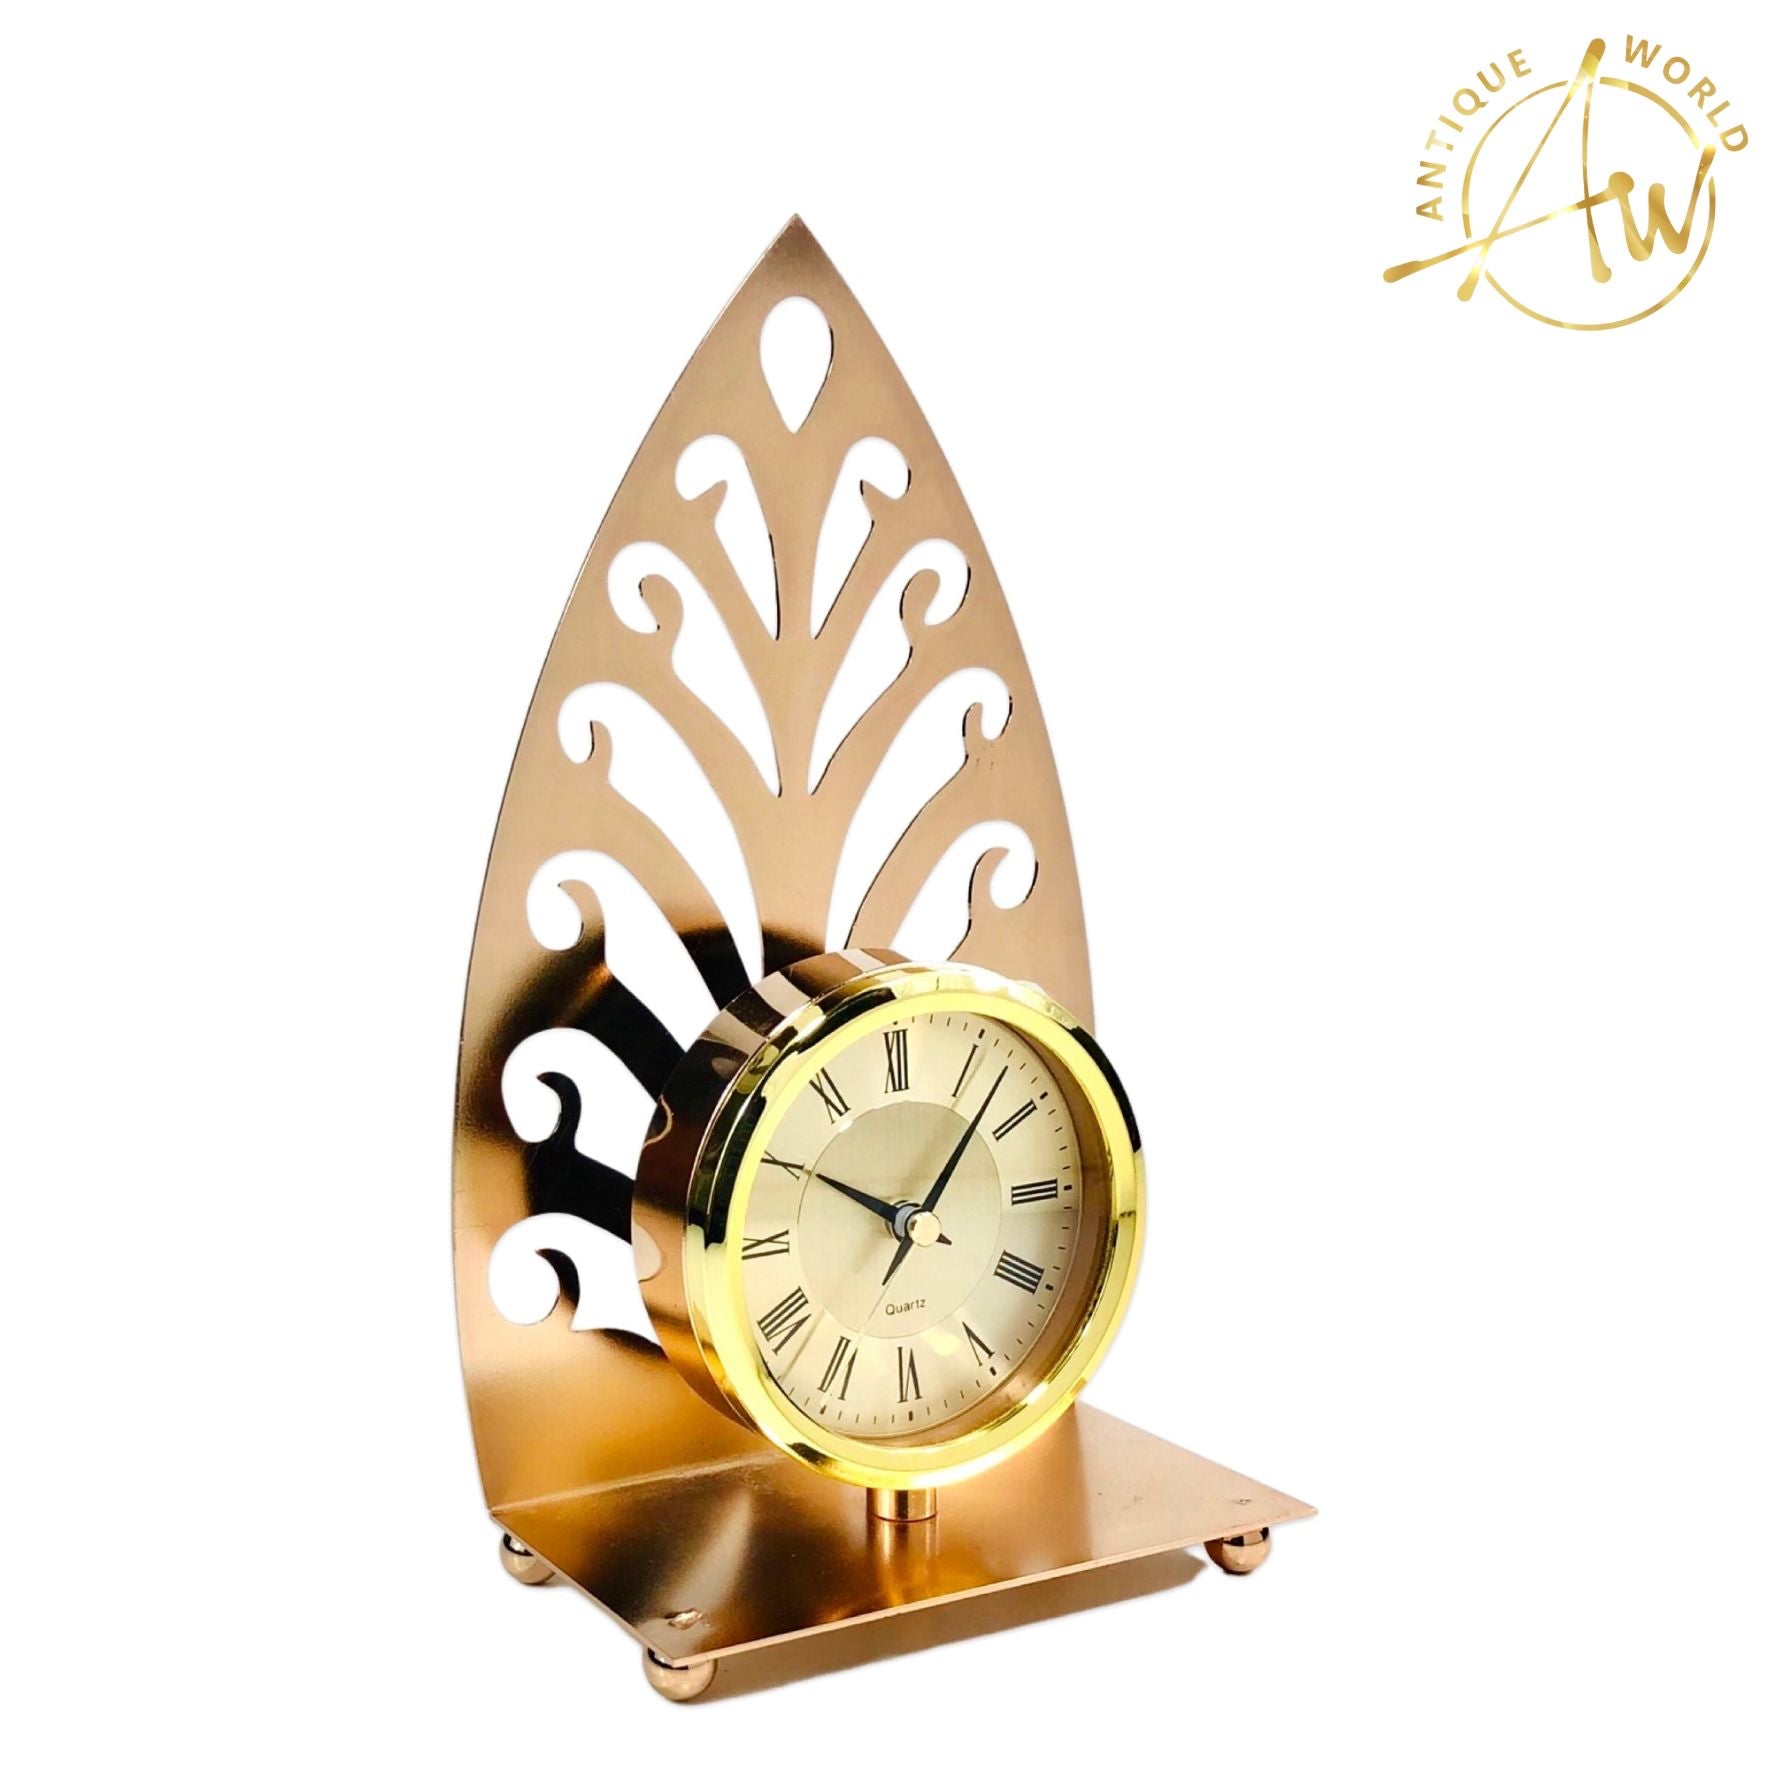 Metallic Golden Leaf Table Clock